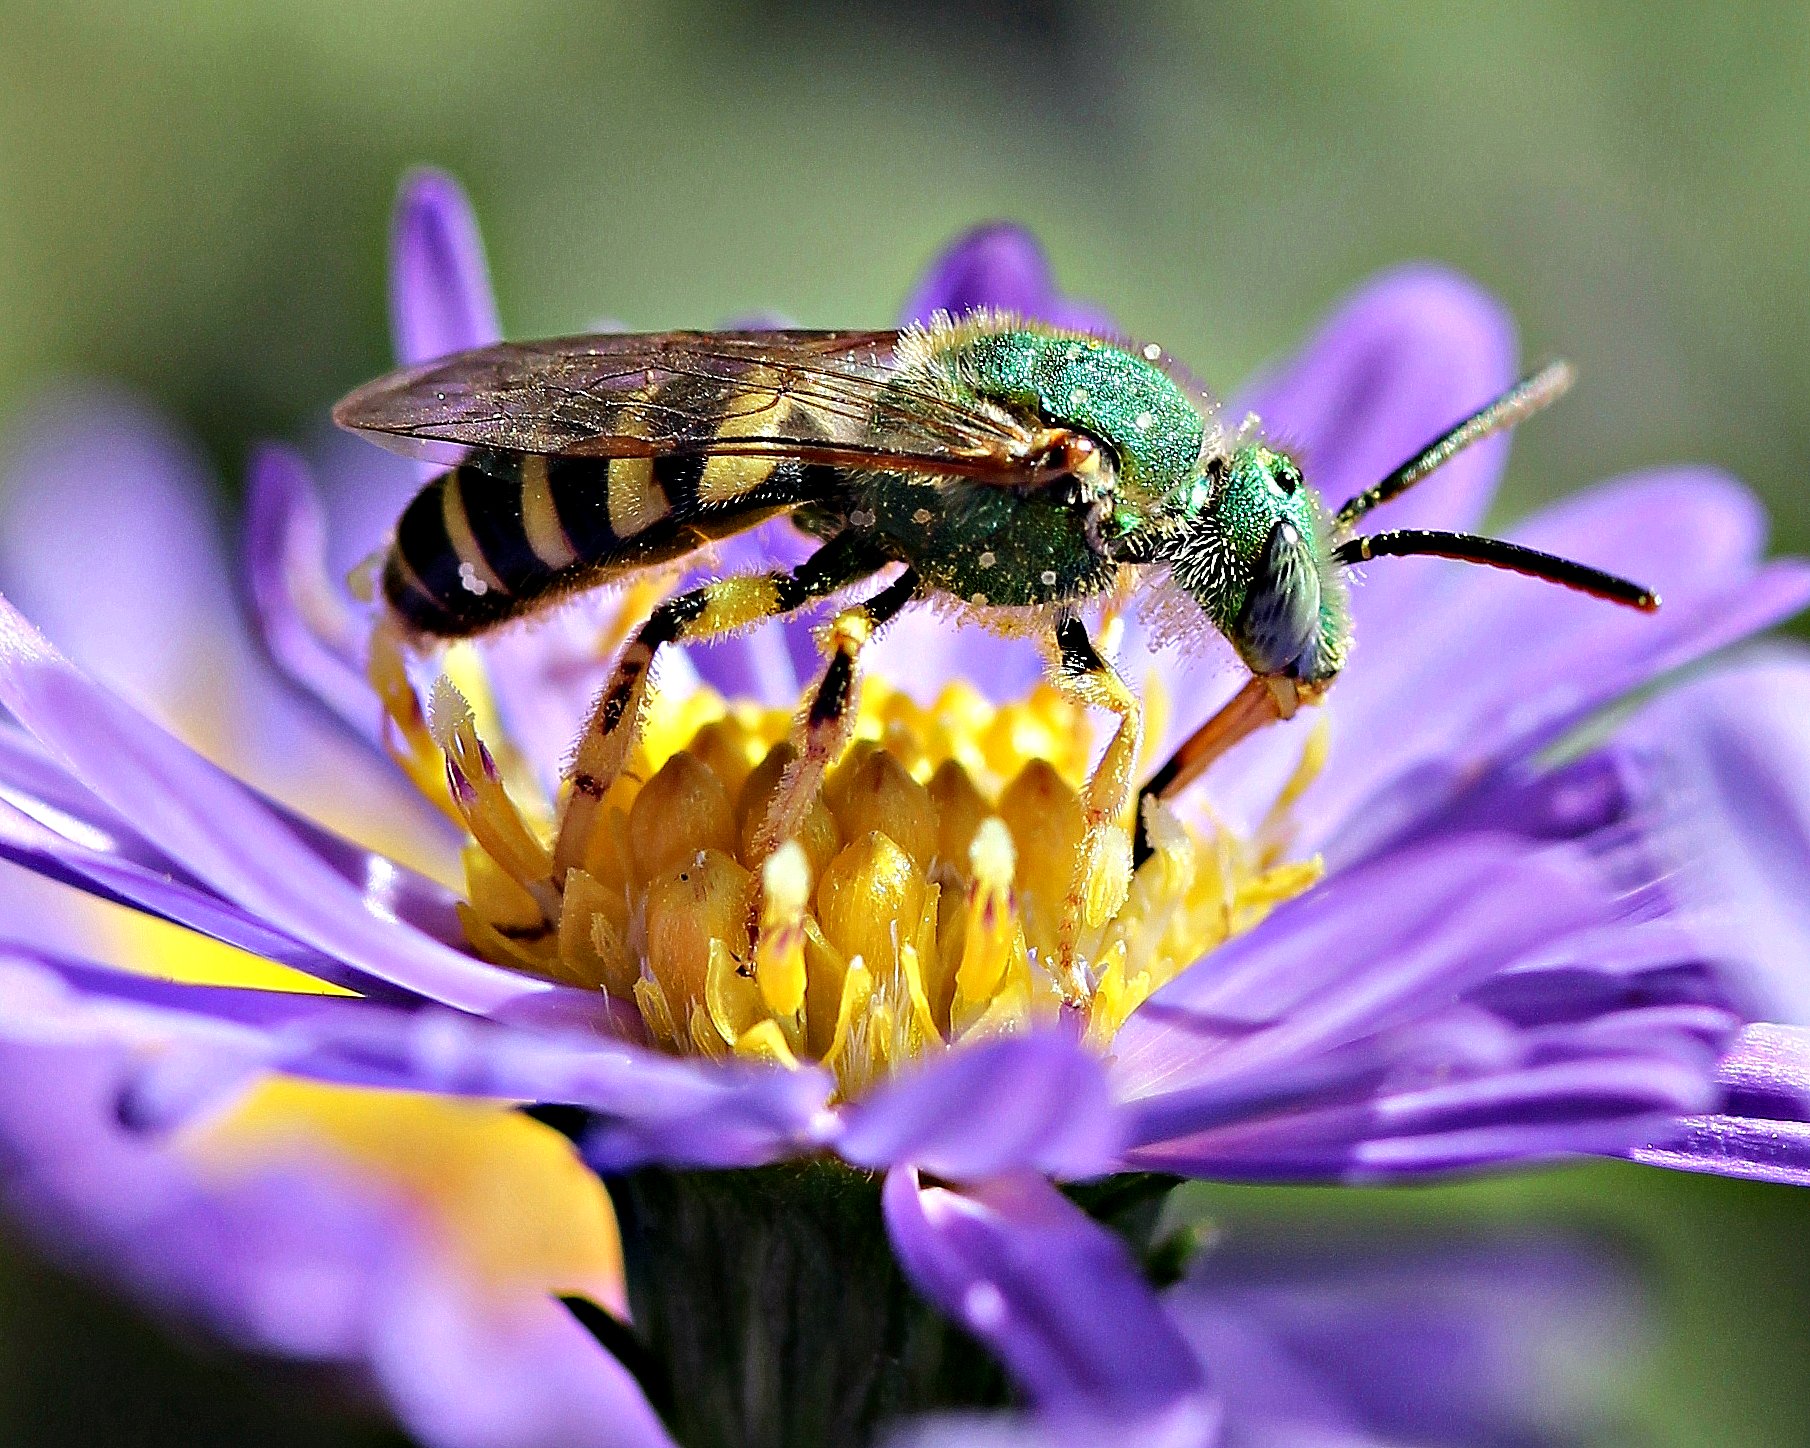 Sweat bee, native to North America. Photo: Patty O'Hearn Kickham via Flickr